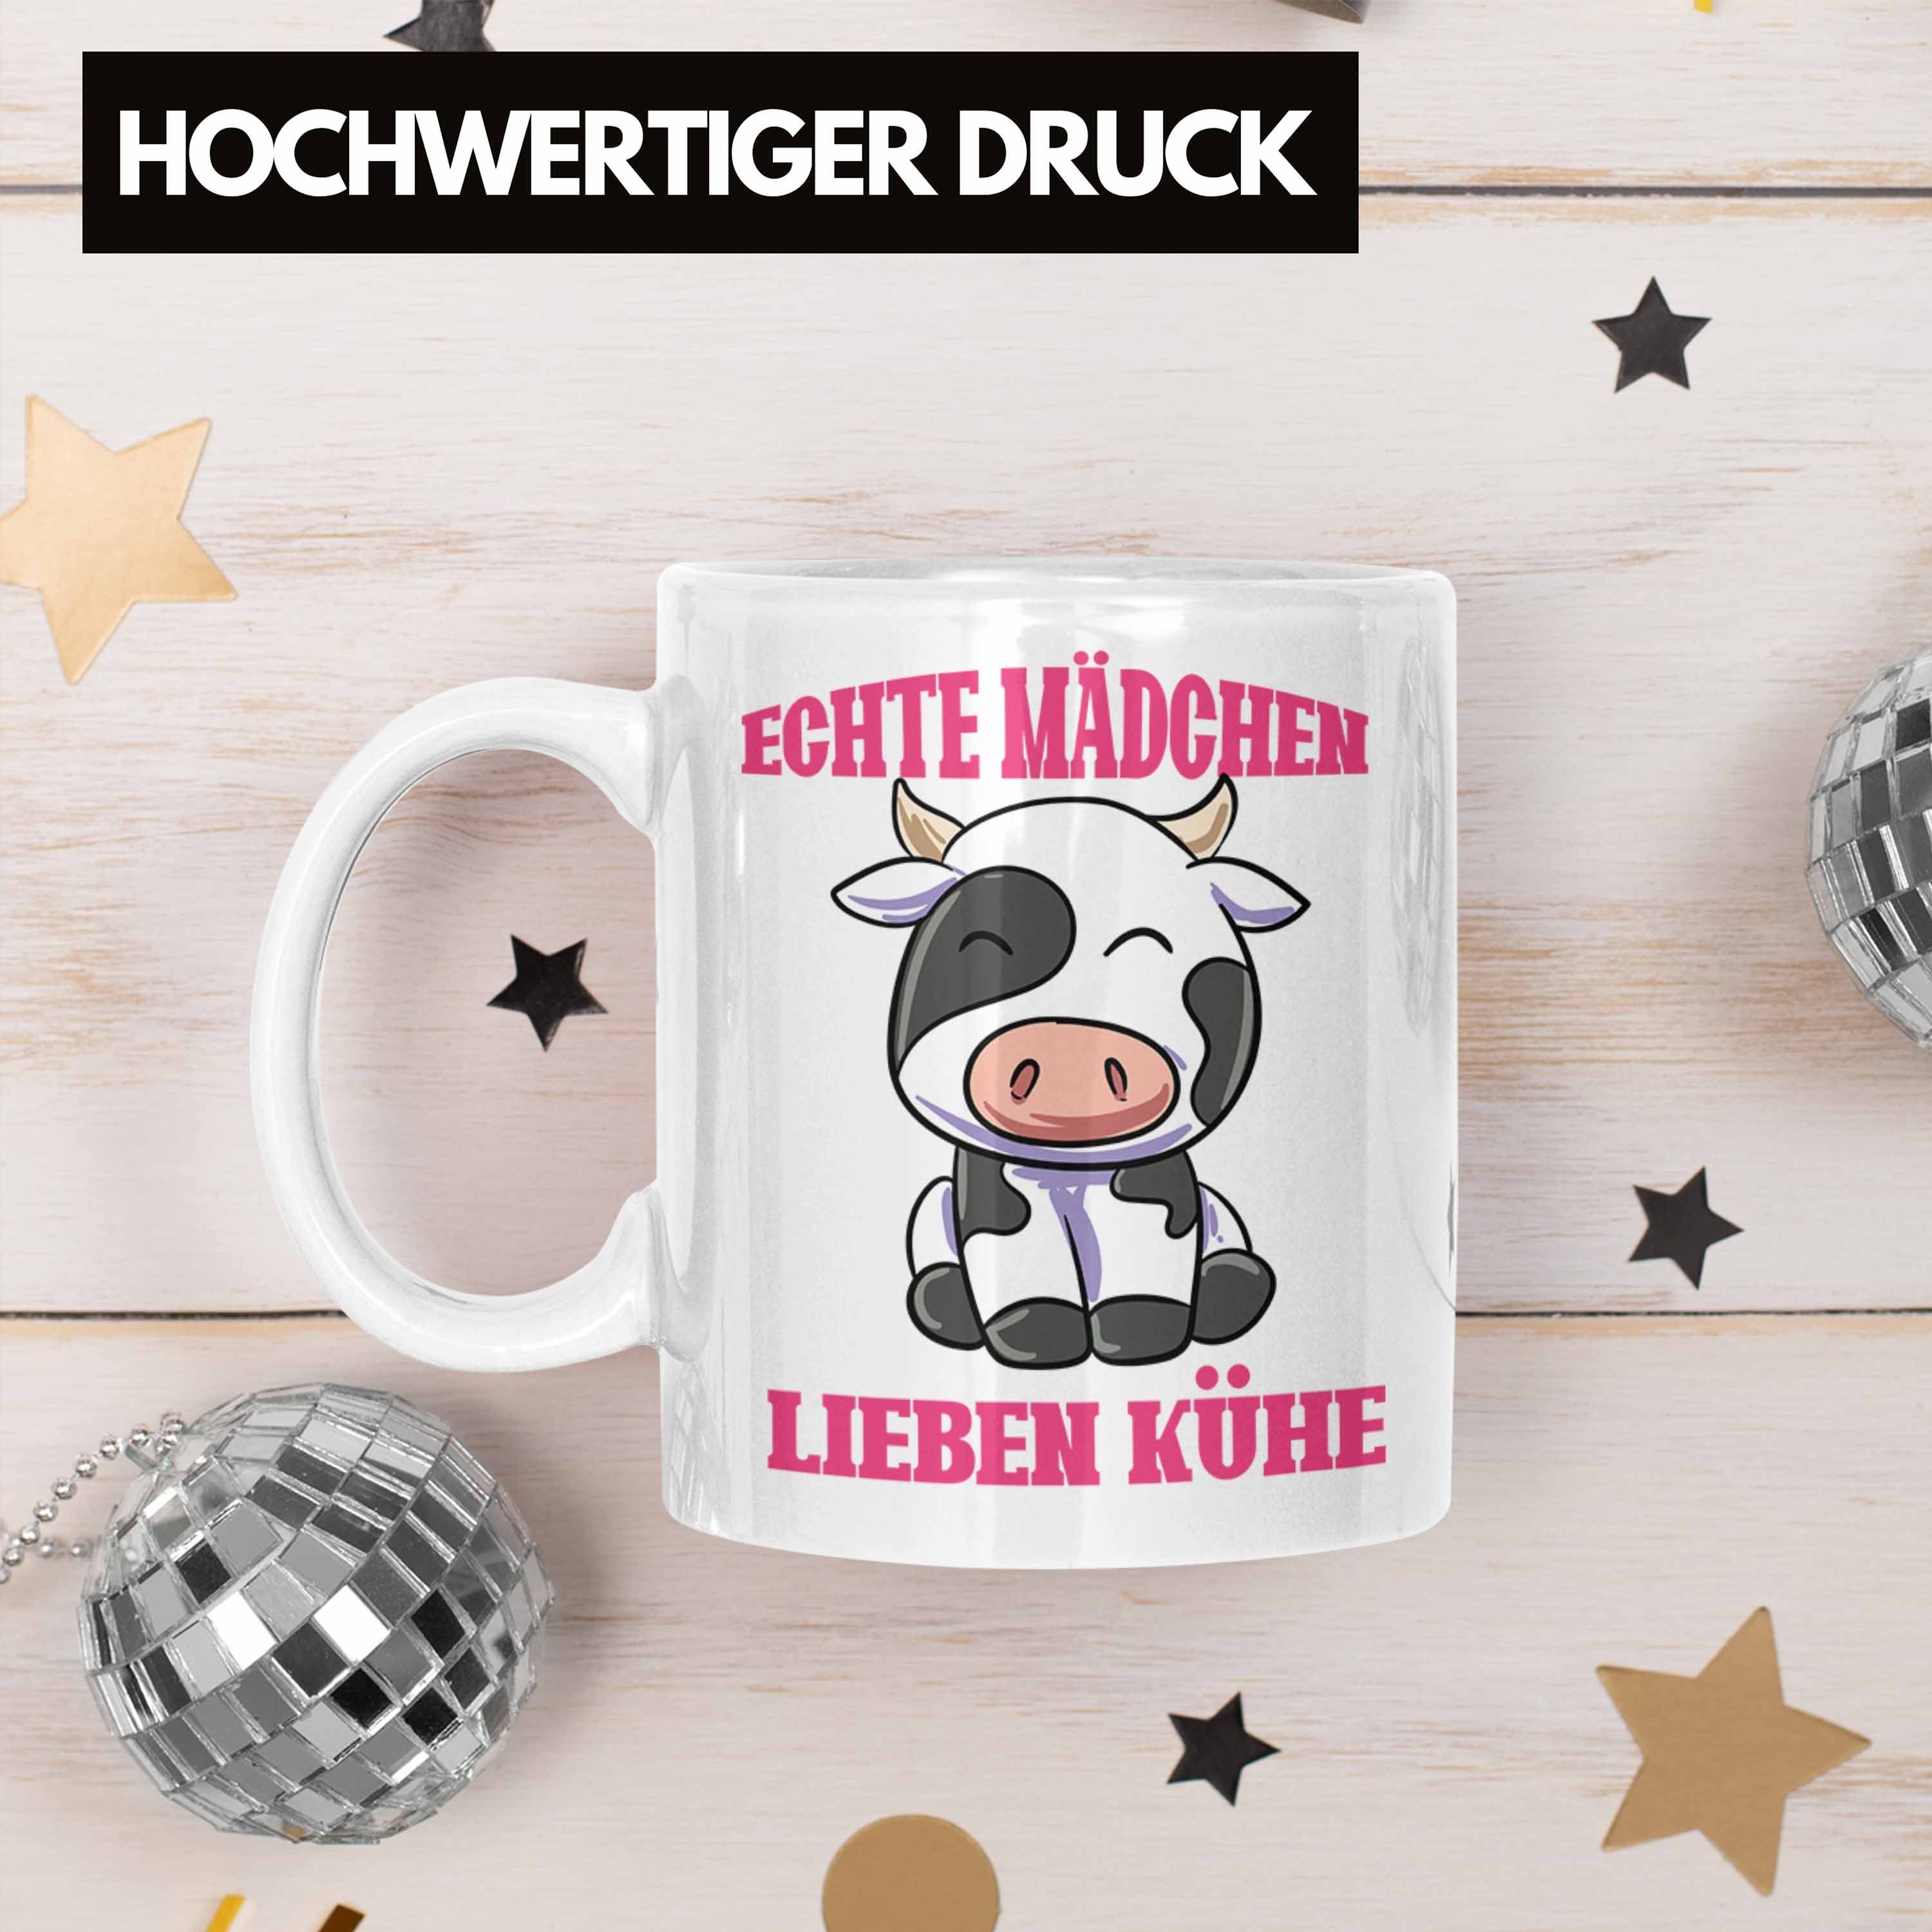 Tasse Mädchen Gesch Lieben Landwirtin Geschenk Echte Tasse Kühe Weiss Kuh Bäuerin Trendation